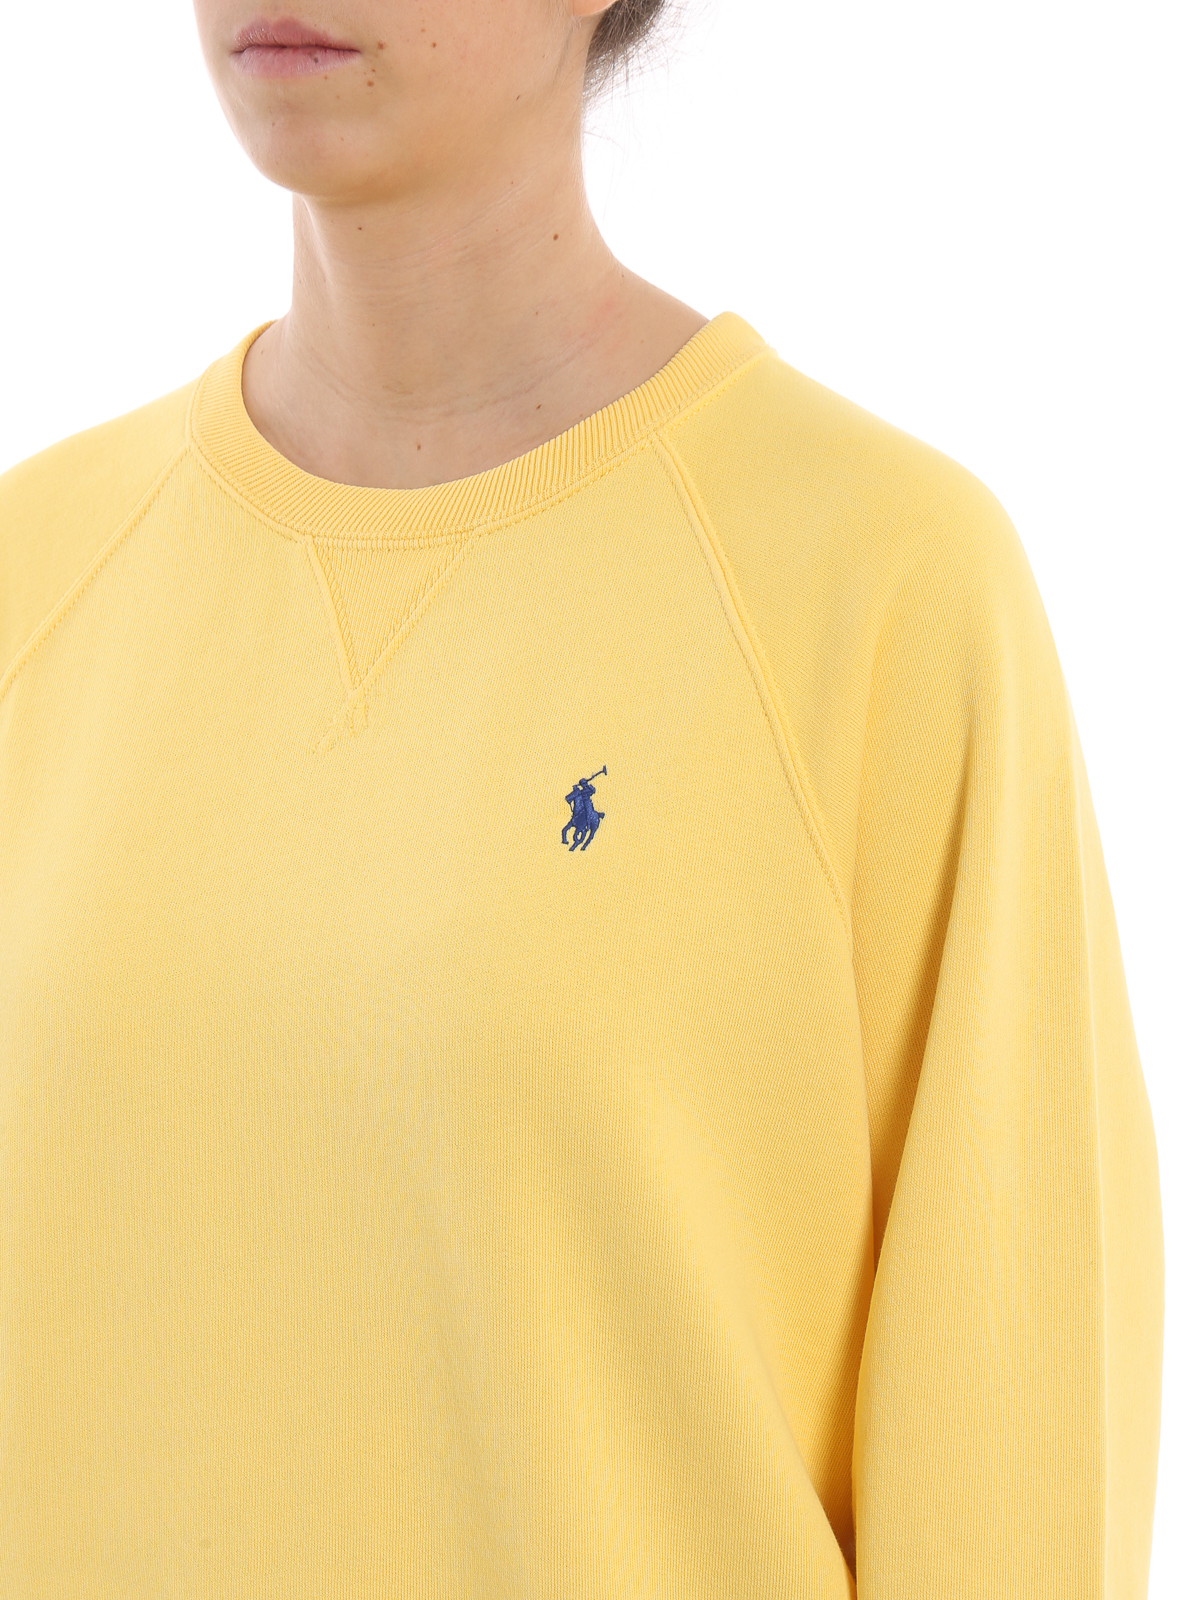 Legeme Skylight Præsident Polo Ralph Lauren Yellow Sweatshirt Sale, SAVE 42% - raptorunderlayment.com